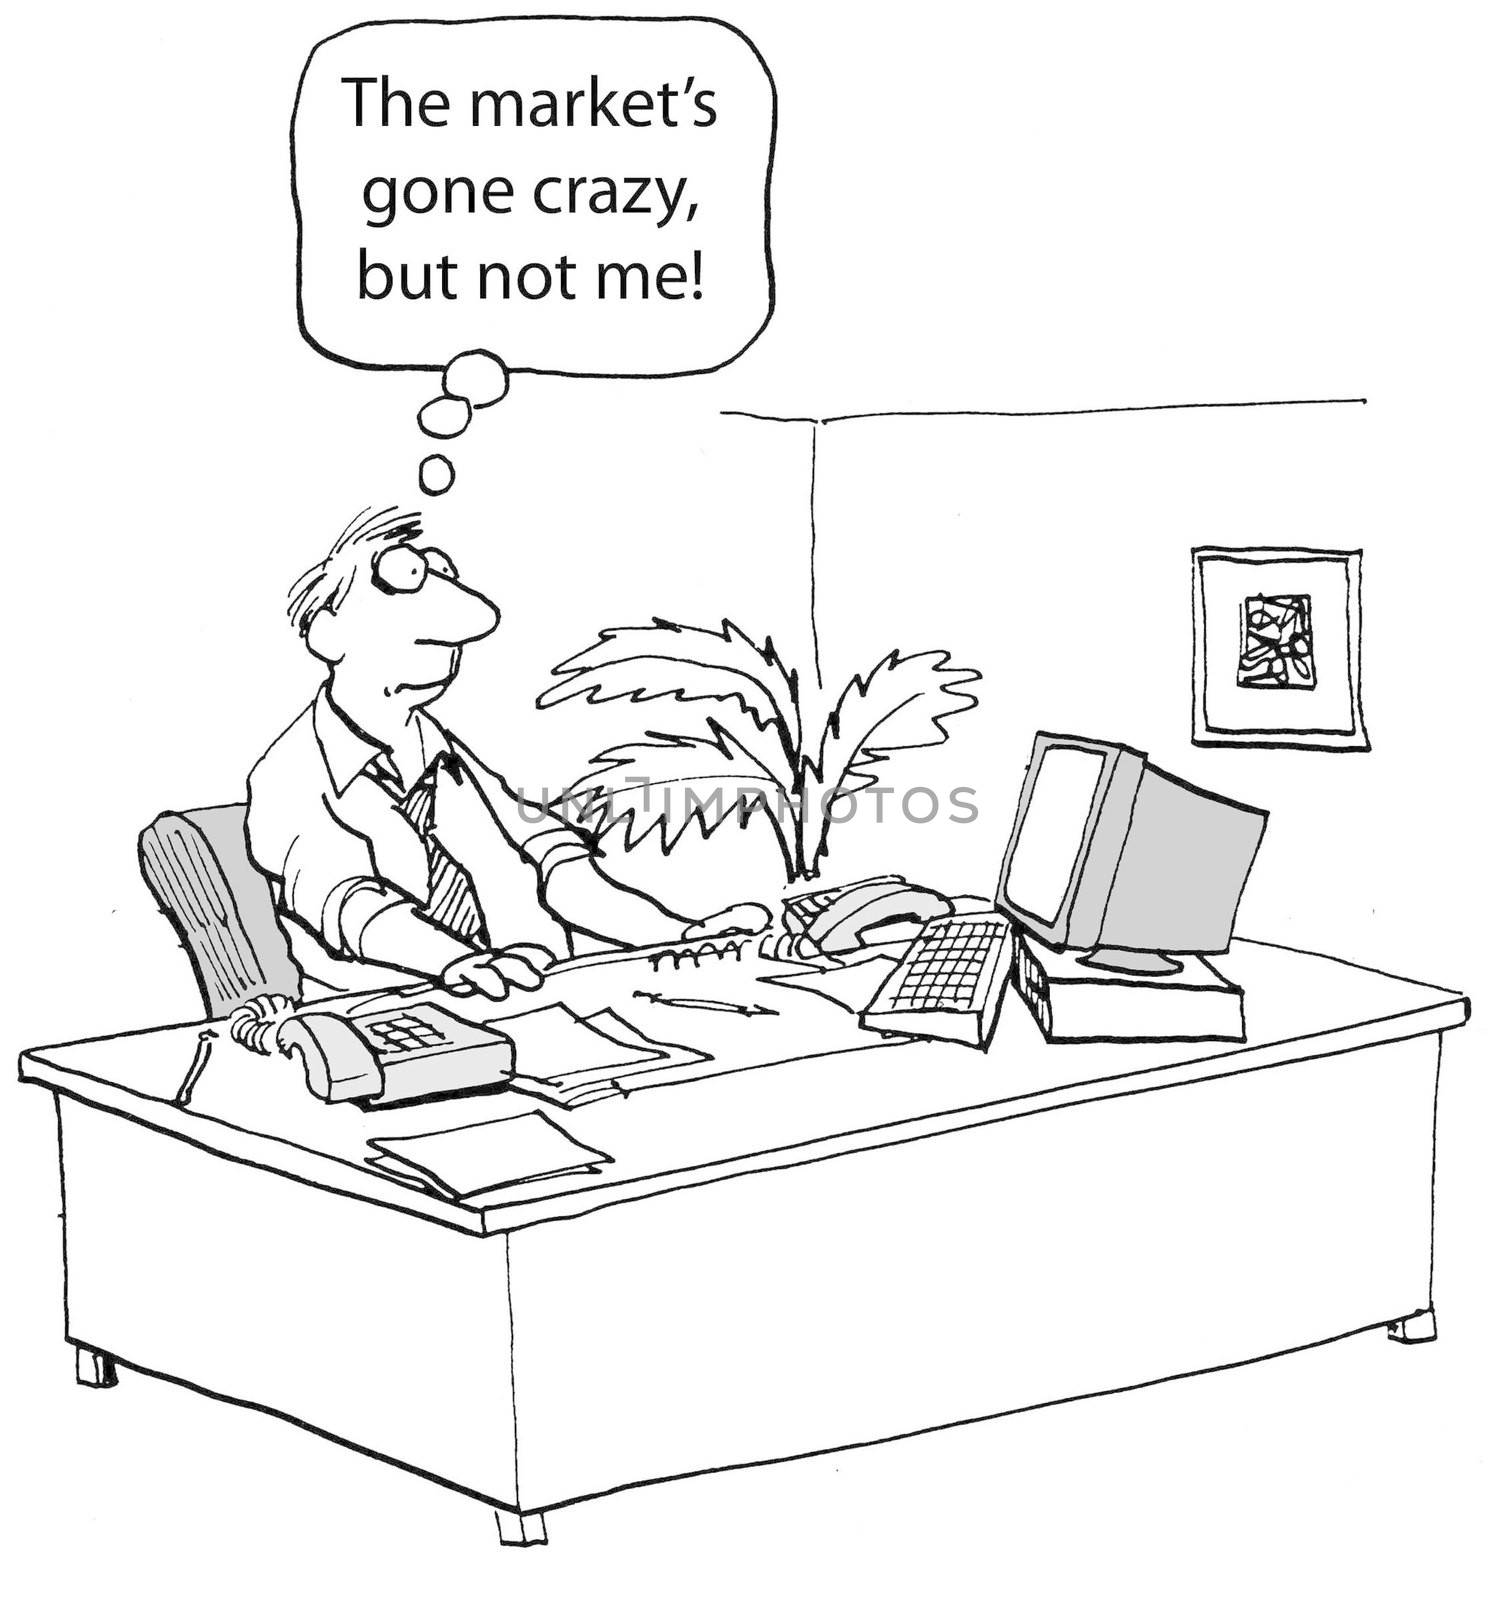 Uncertain Stock Market by andrewgenn